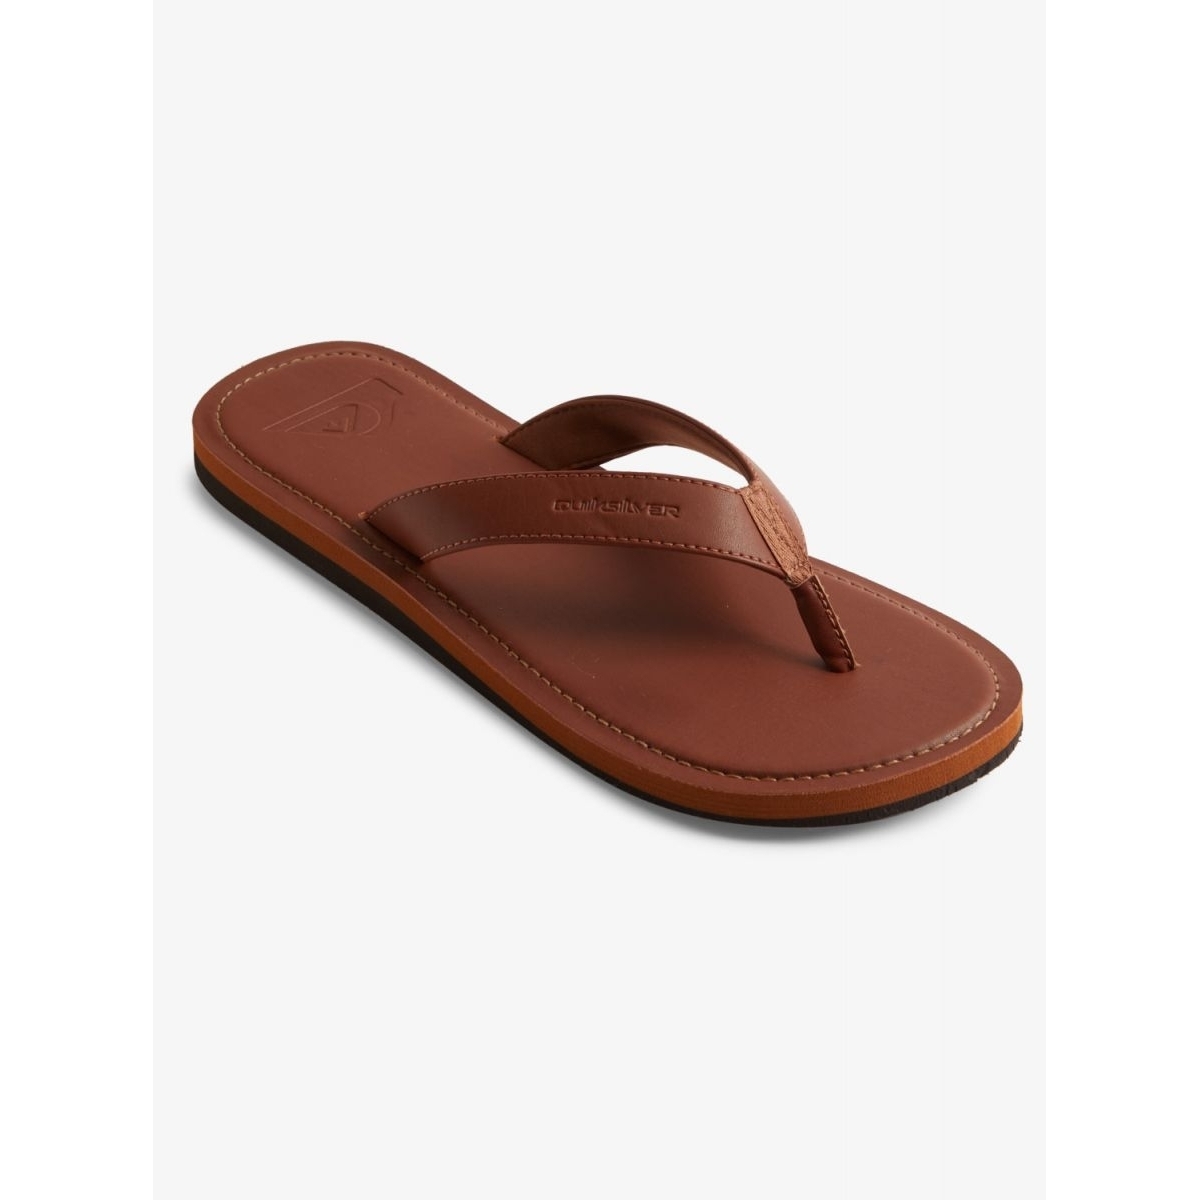 Quiksilver Men's Molokai Nubuck Flip Flop Sandals Tan Solid - AQYL100960-TKD0 TAN SOLID - TAN SOLID, 14